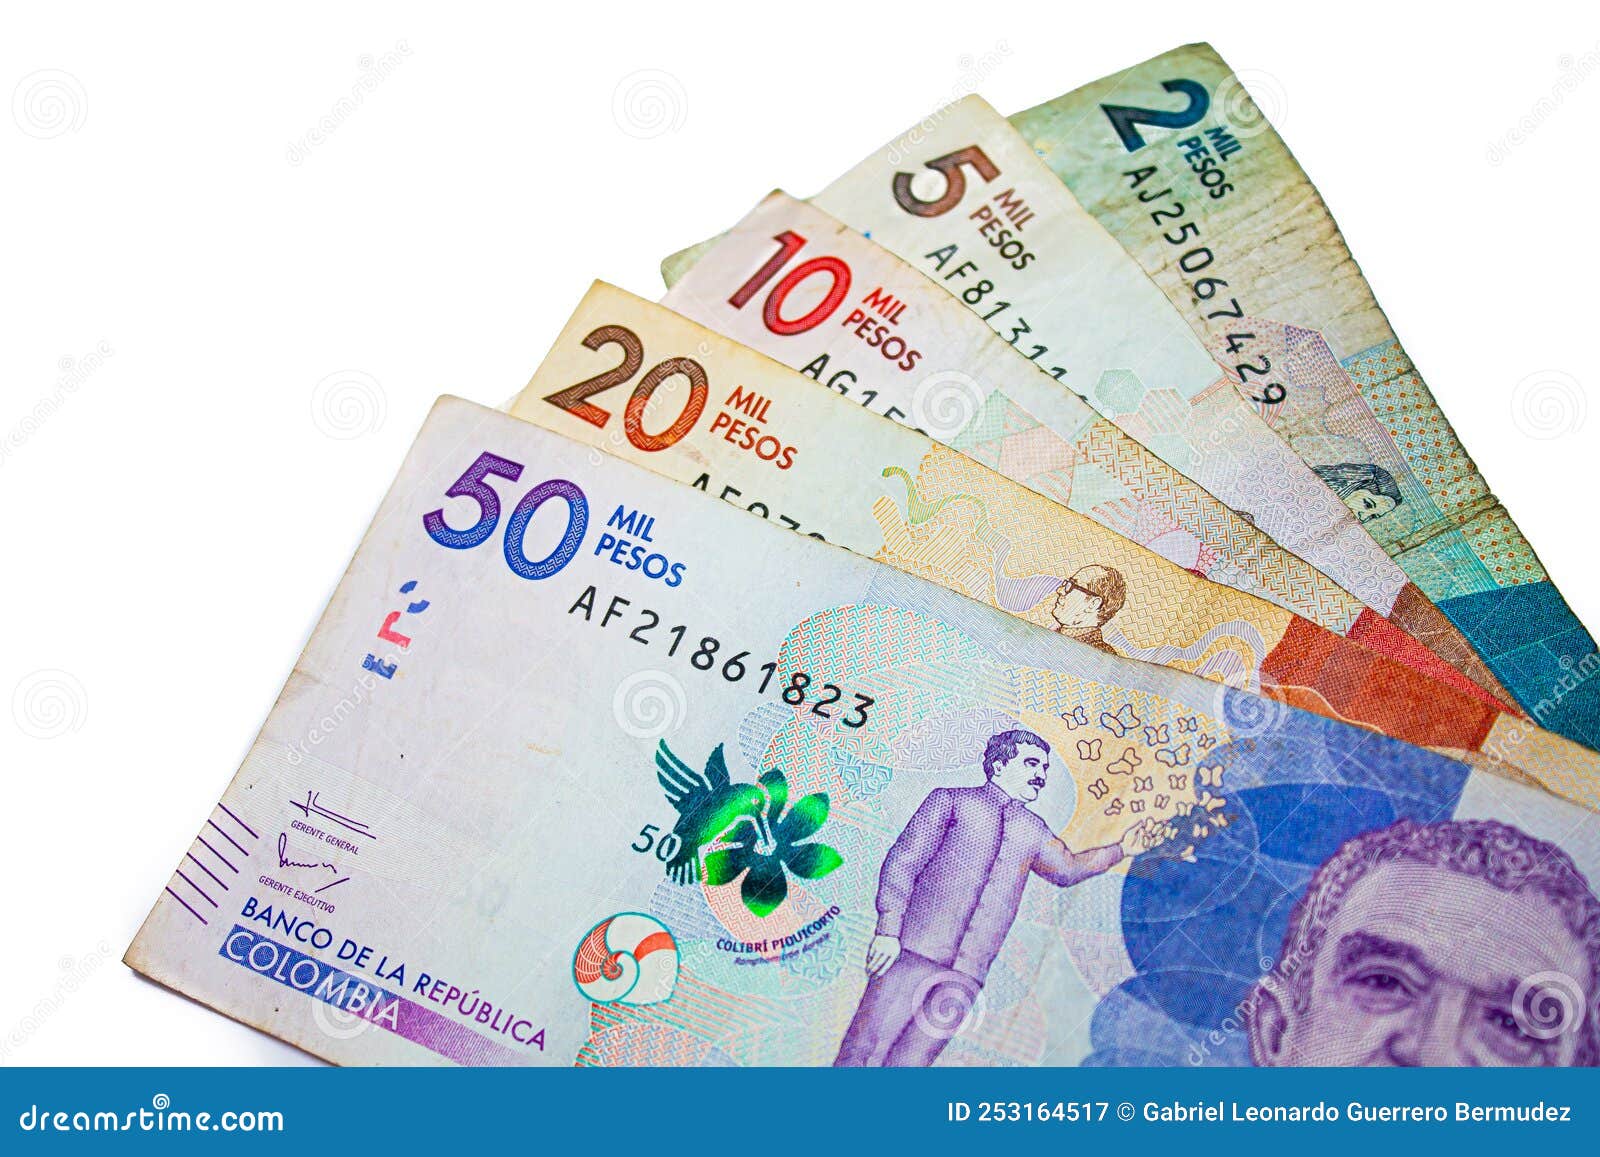 colombian peso bills